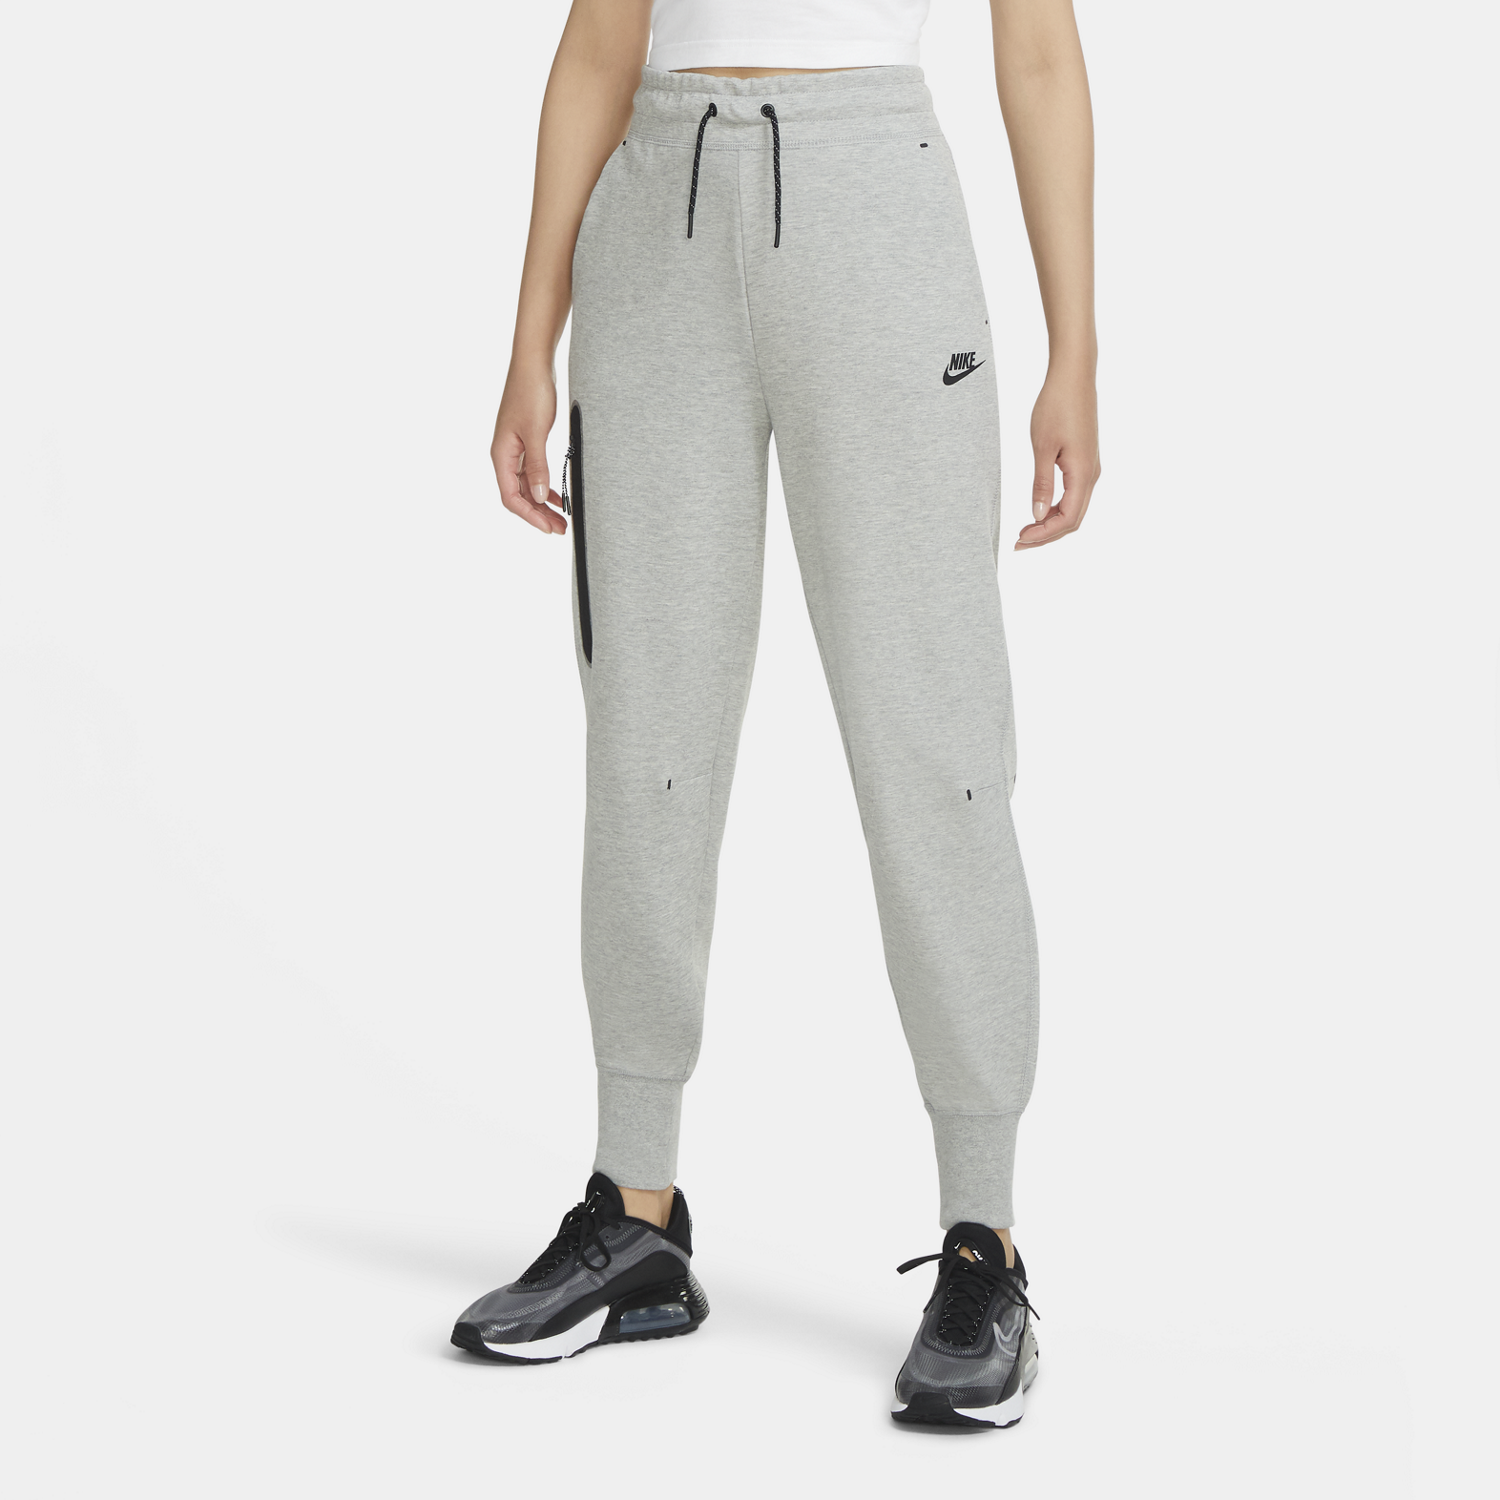 Nike Women's Tech Fleece Capri Culottes Shorts Heather Gray and Black XL